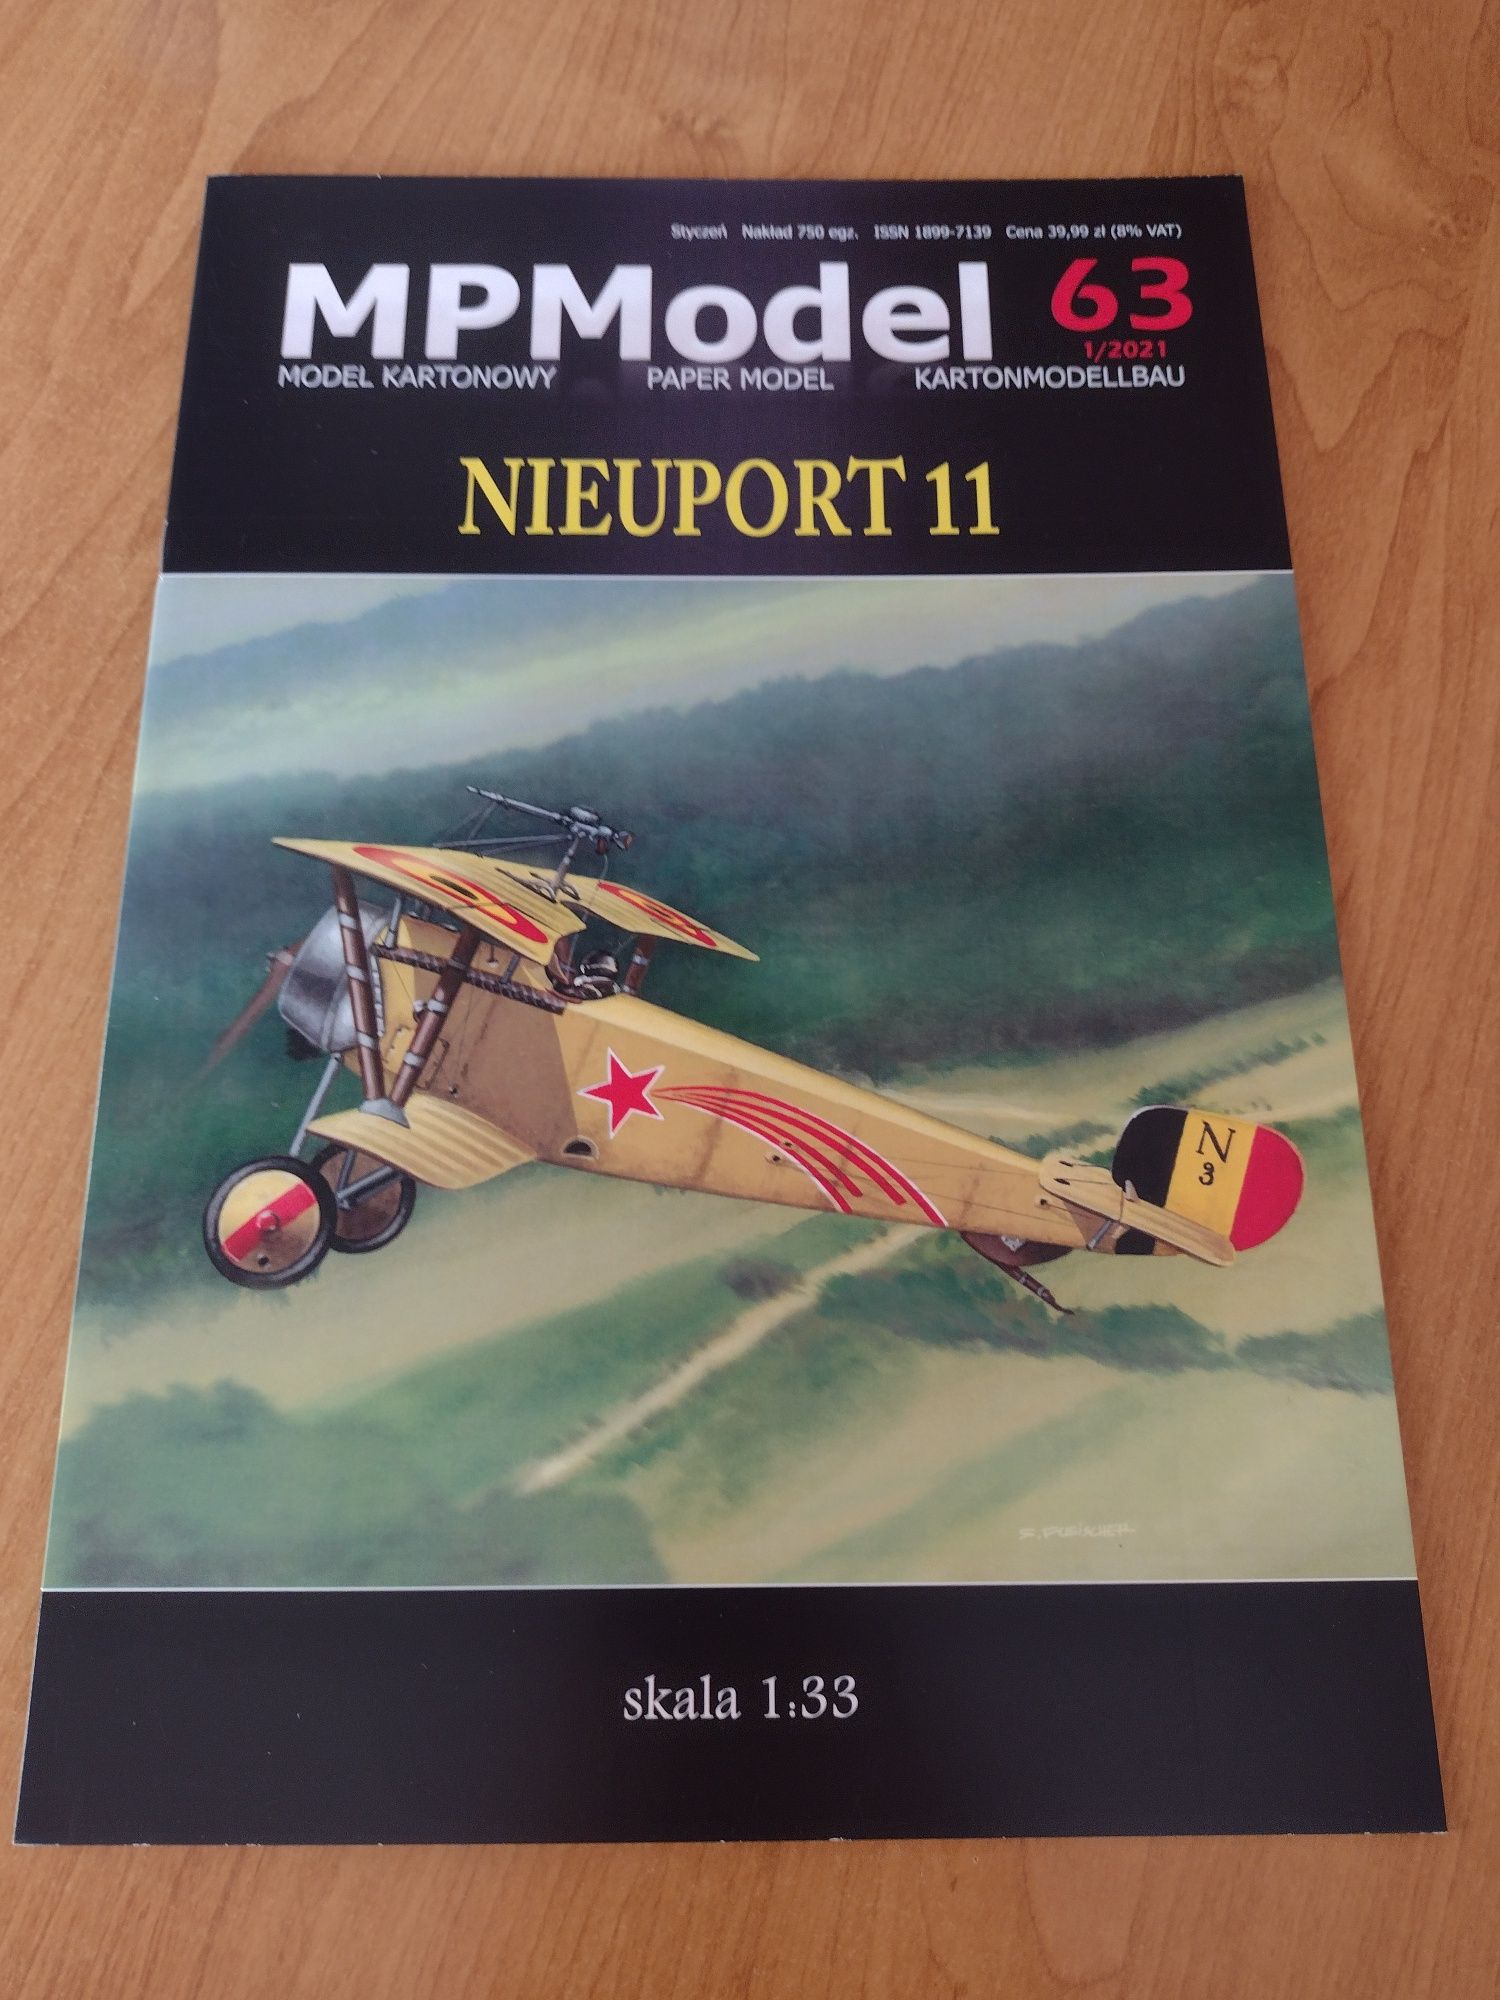 Model kartonowy MPModel Nieuport 11